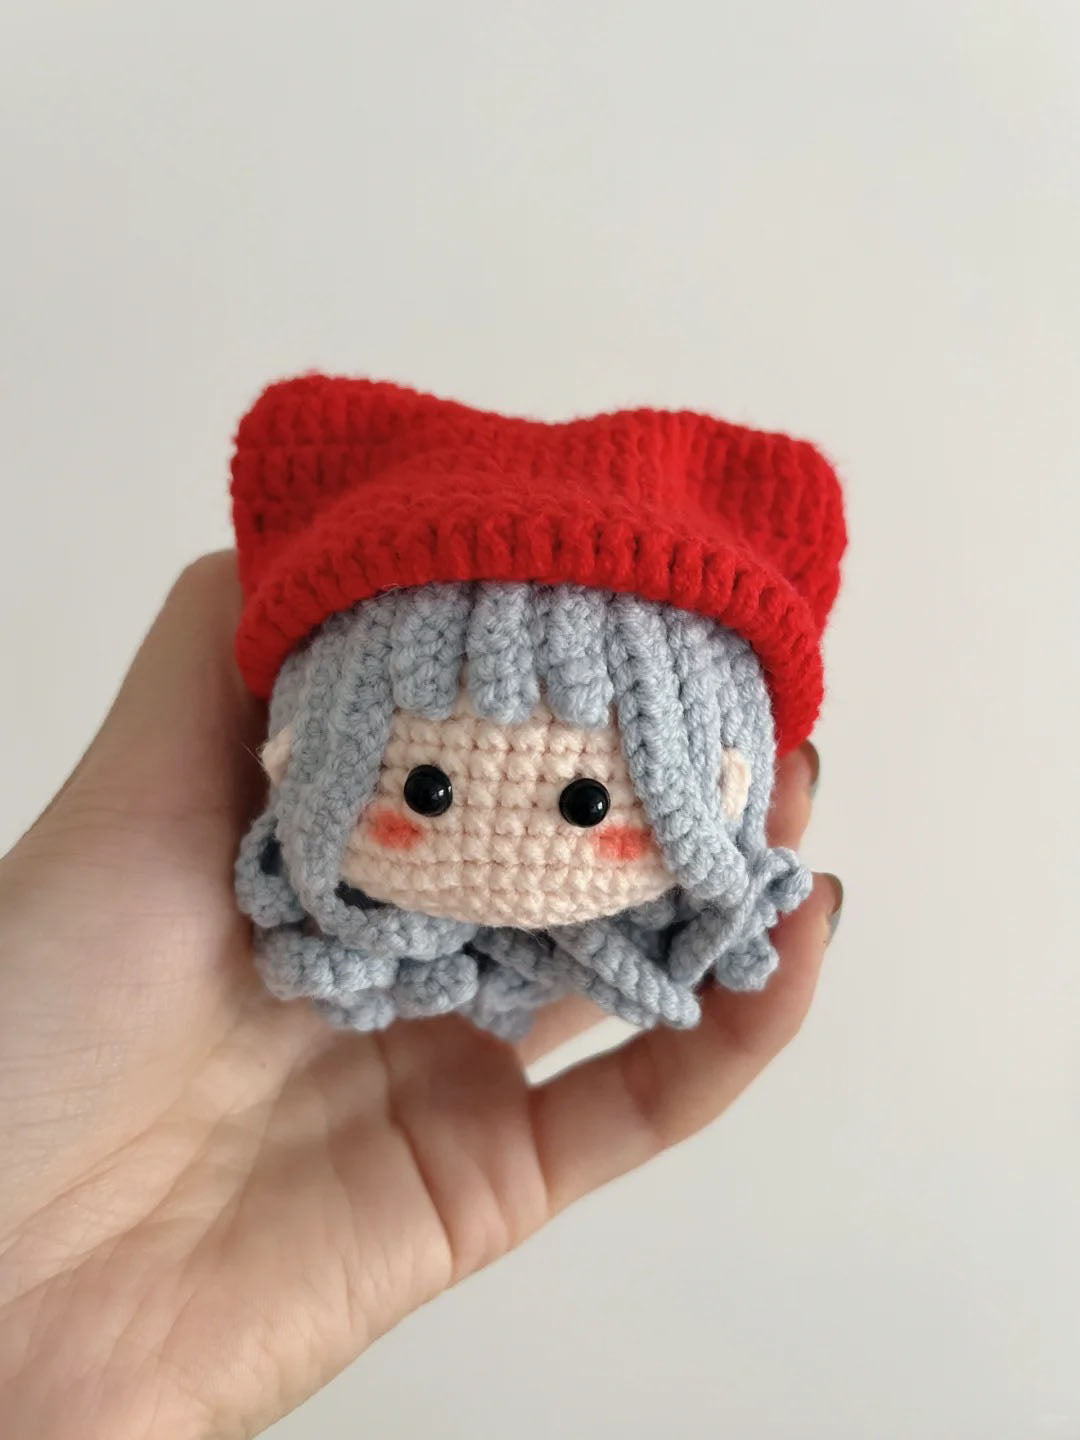 Red Beanie Hat Girl Crochet Pattern